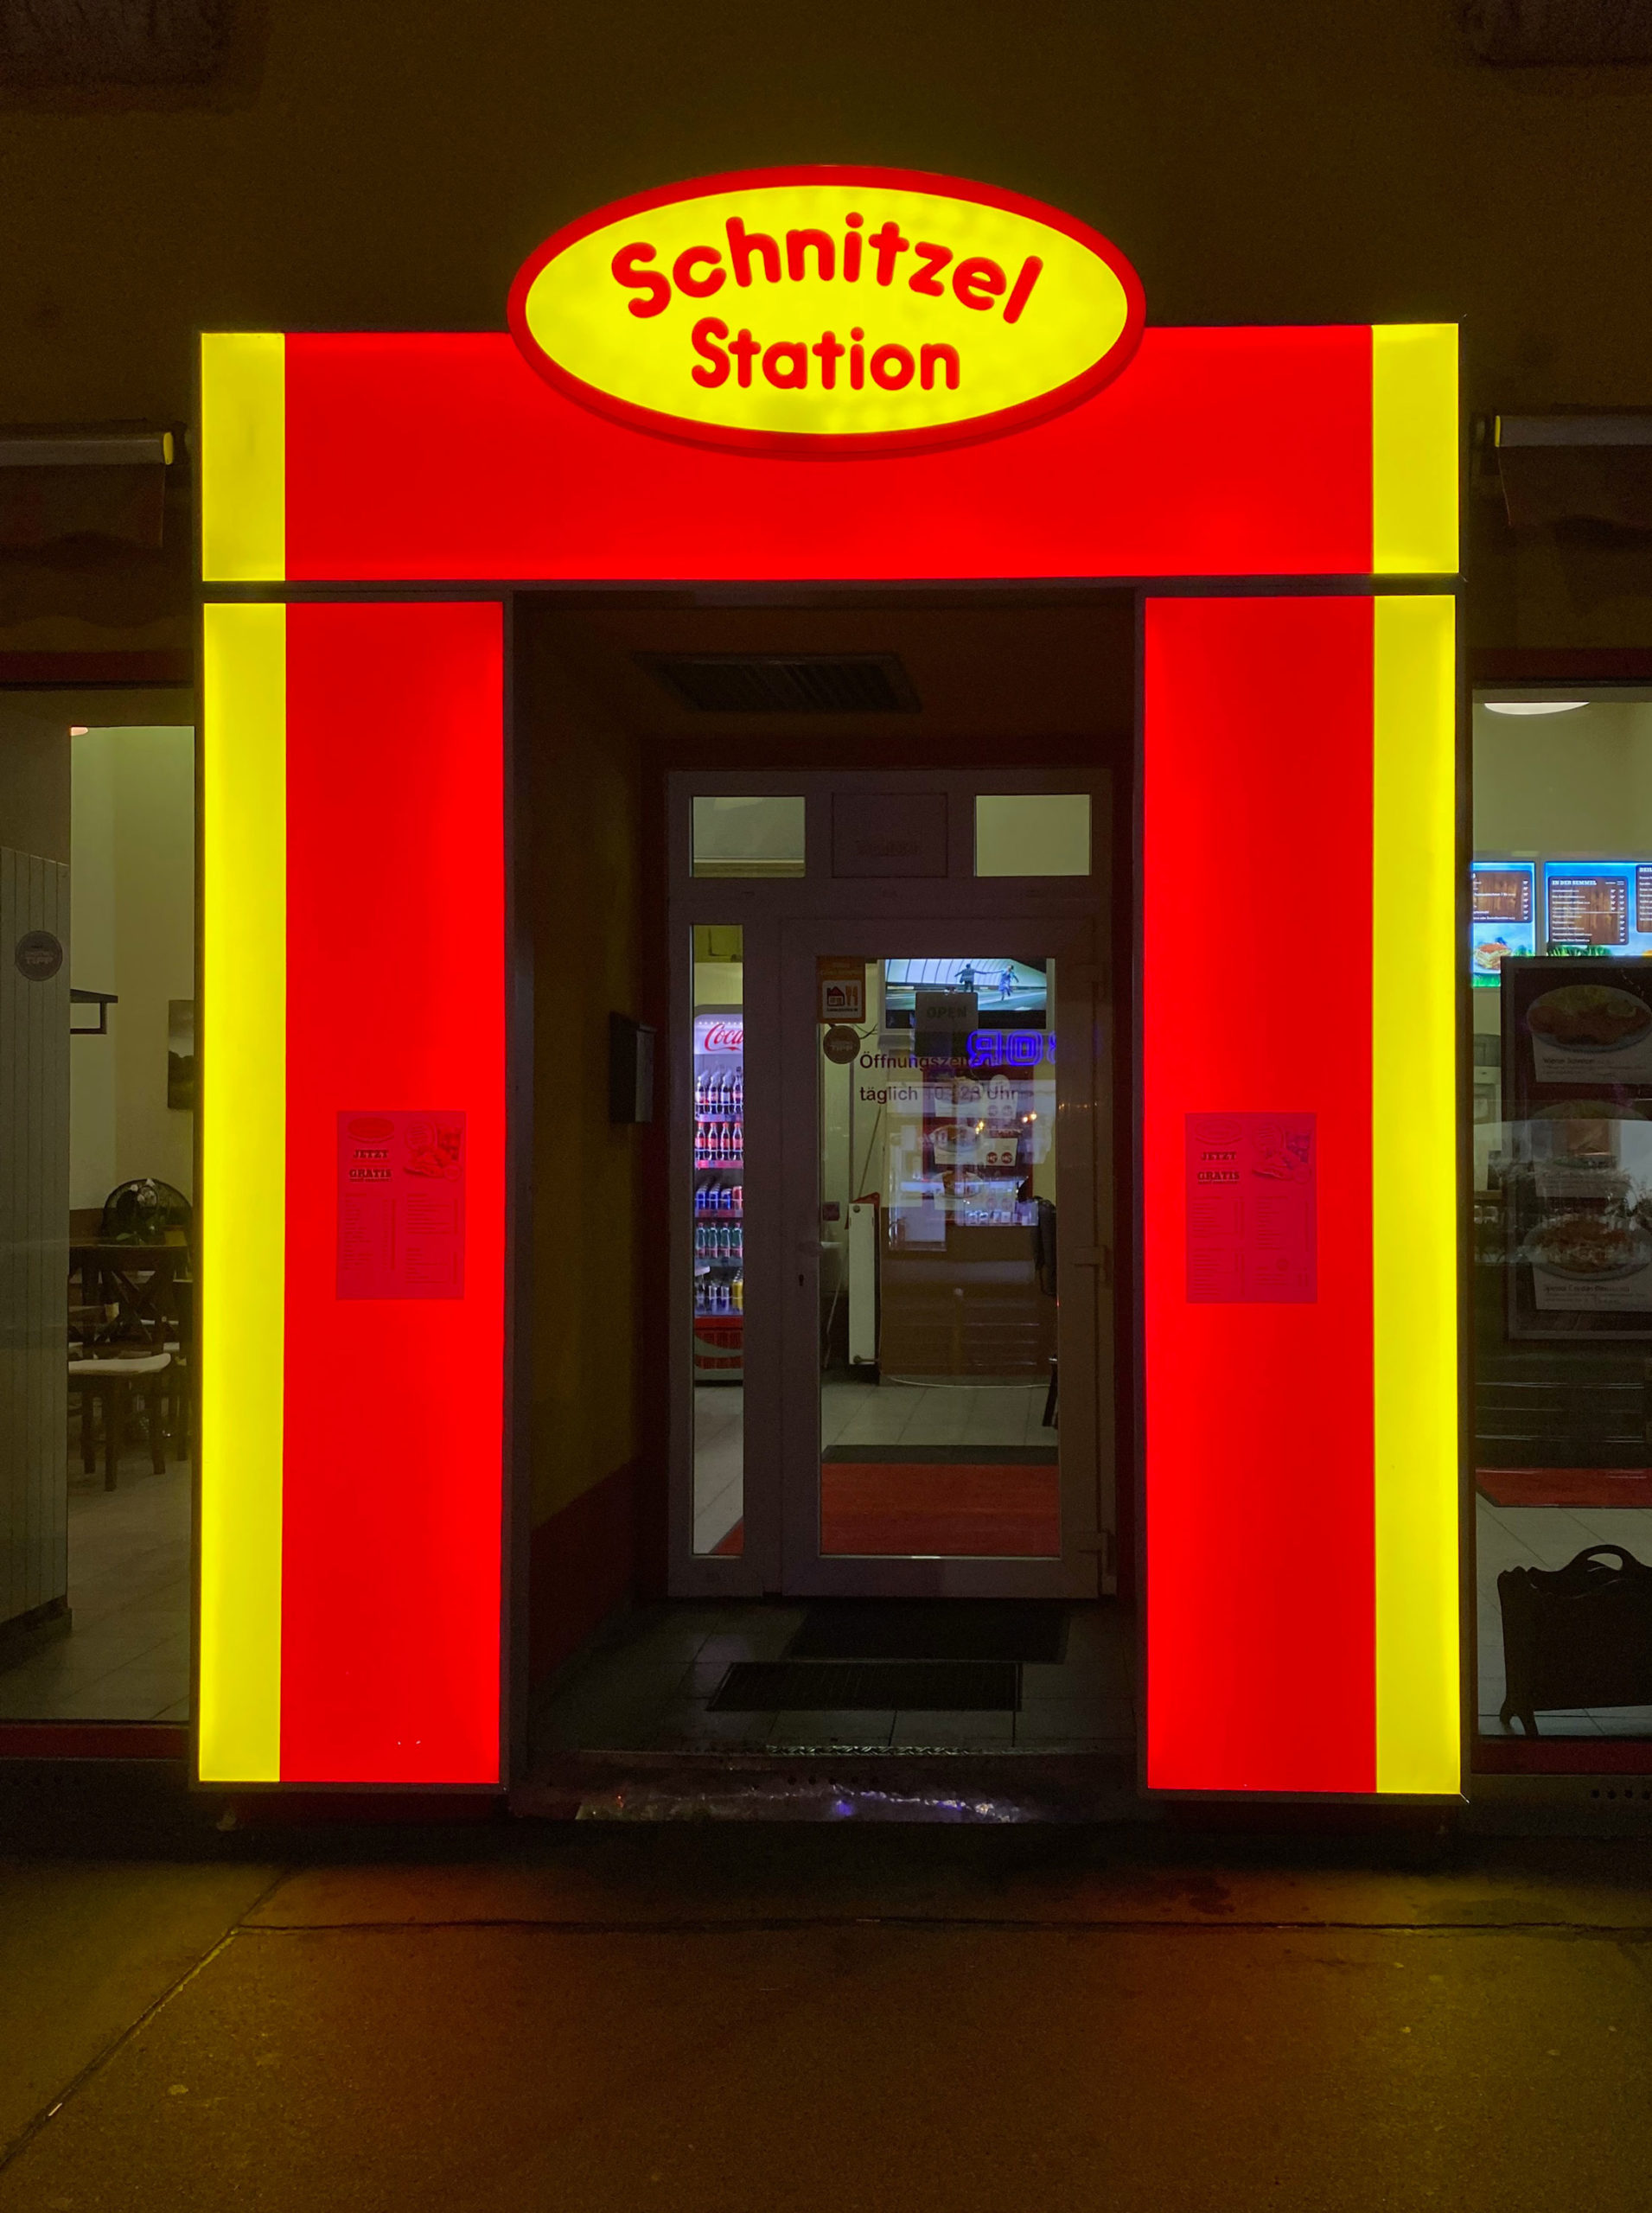 Schnitzel Station